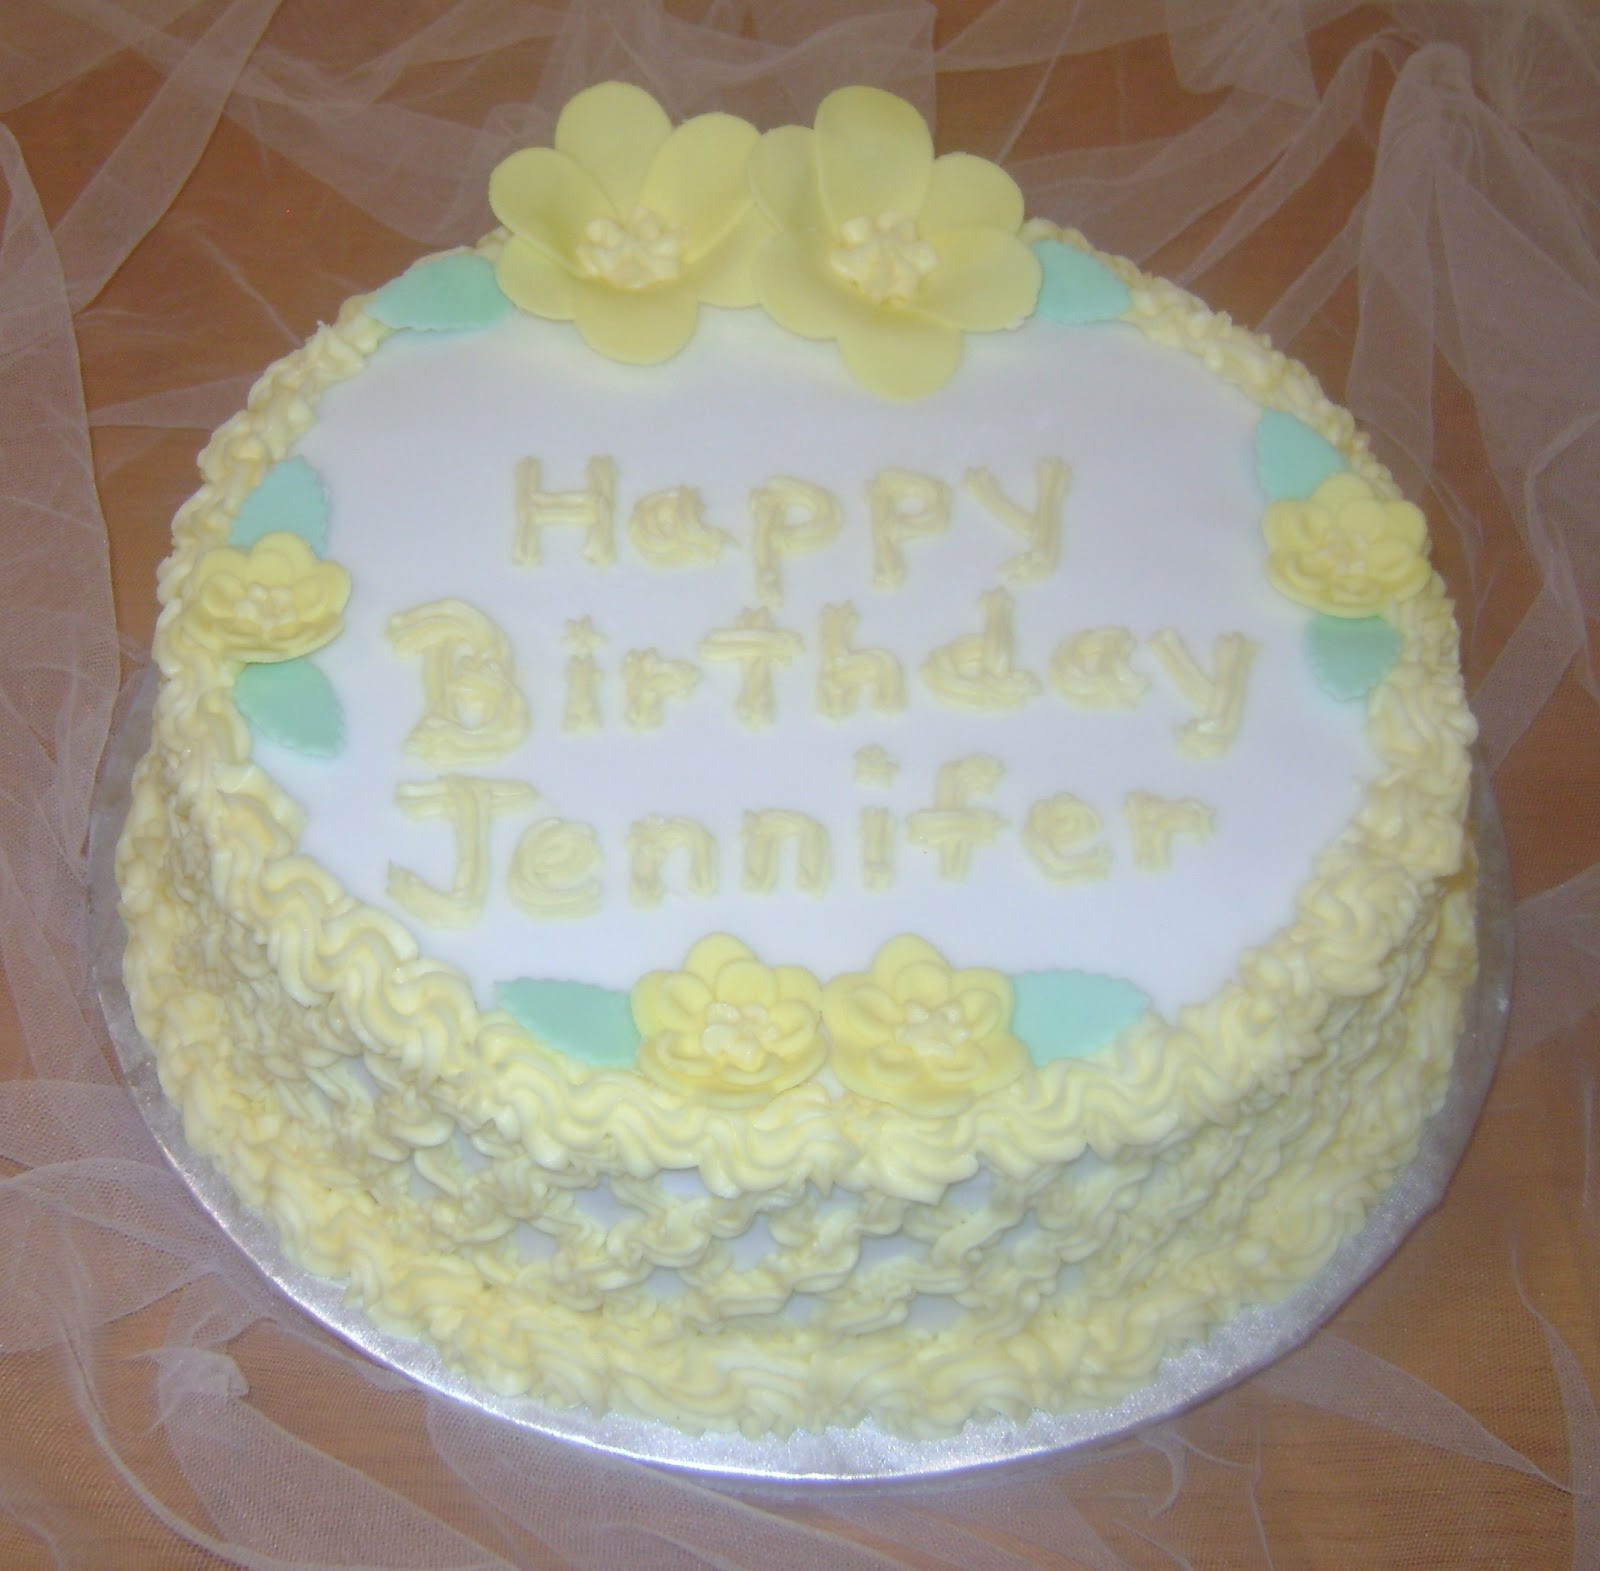 Best ideas about Happy Birthday Jennifer Cake
. Save or Pin Marilyn s Caribbean Cakes Happy Birthday Jennifer Now.